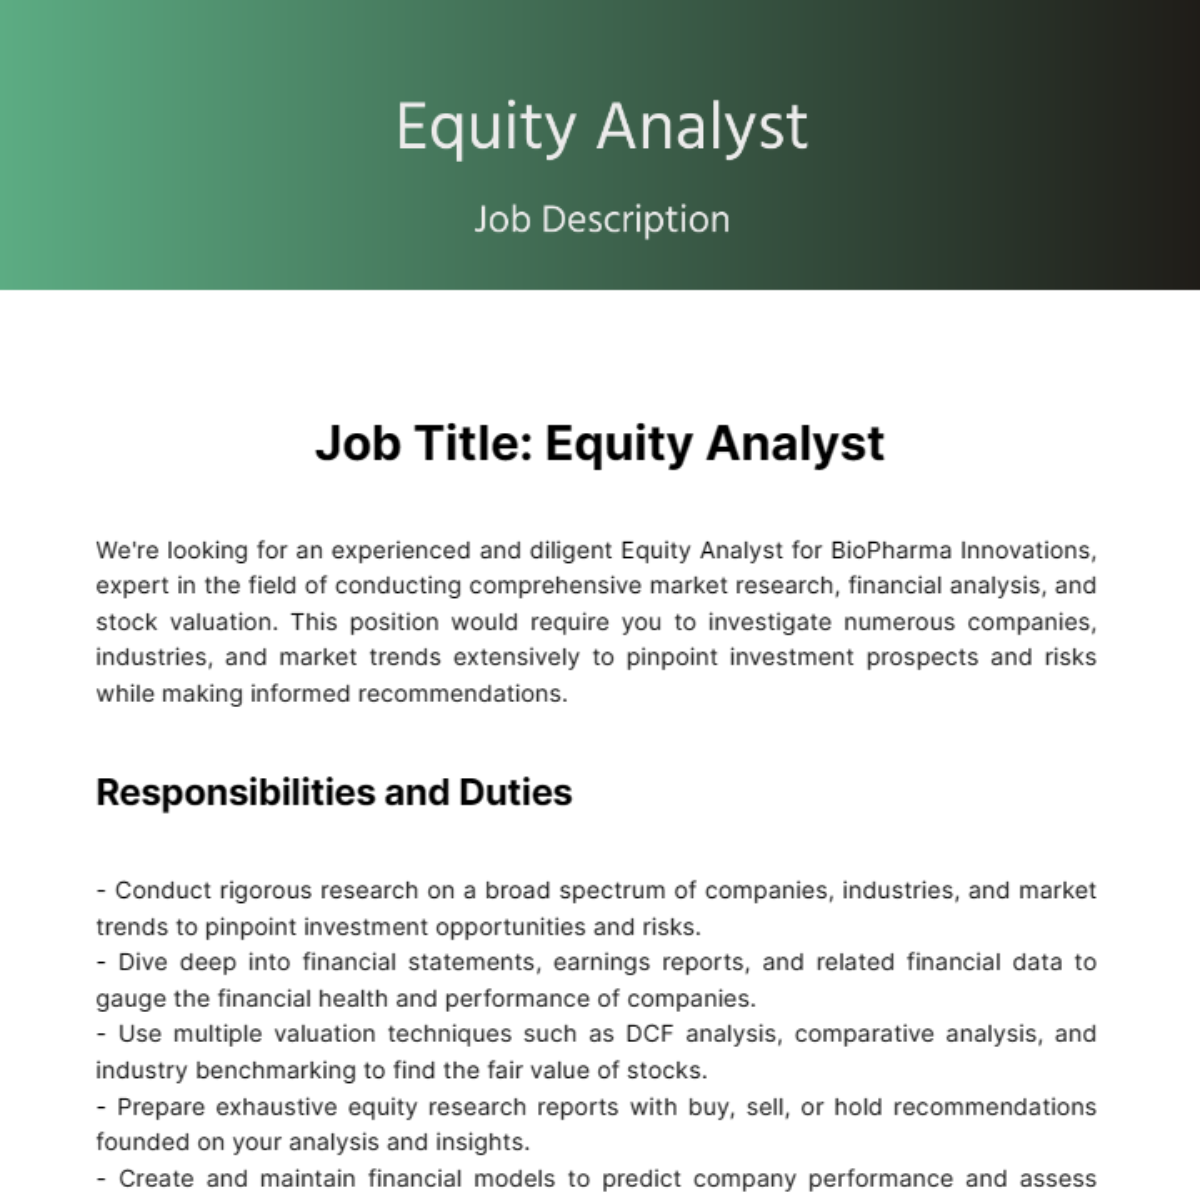 Equity Analyst Job Description Template